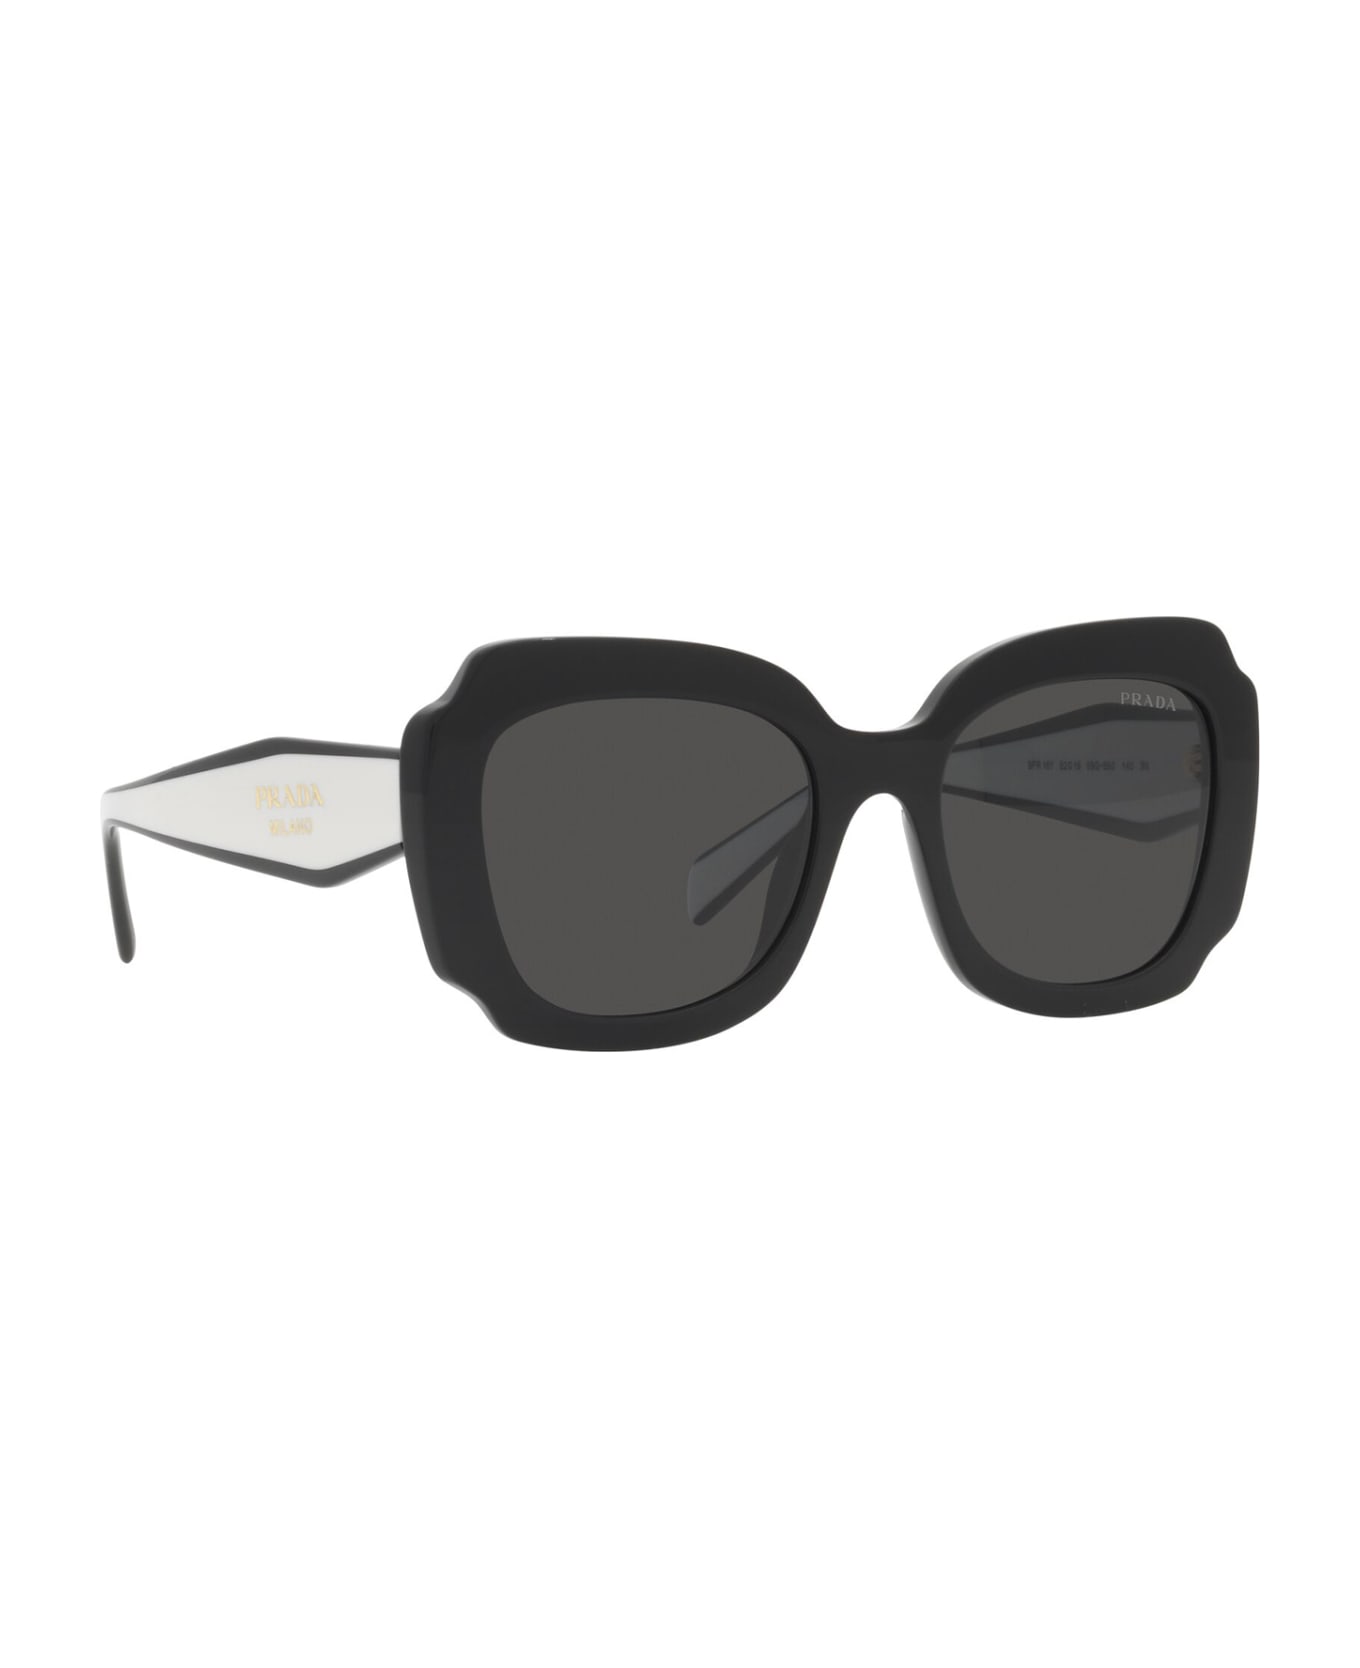 Prada Eyewear Pr 16ys Black Sunglasses - Black